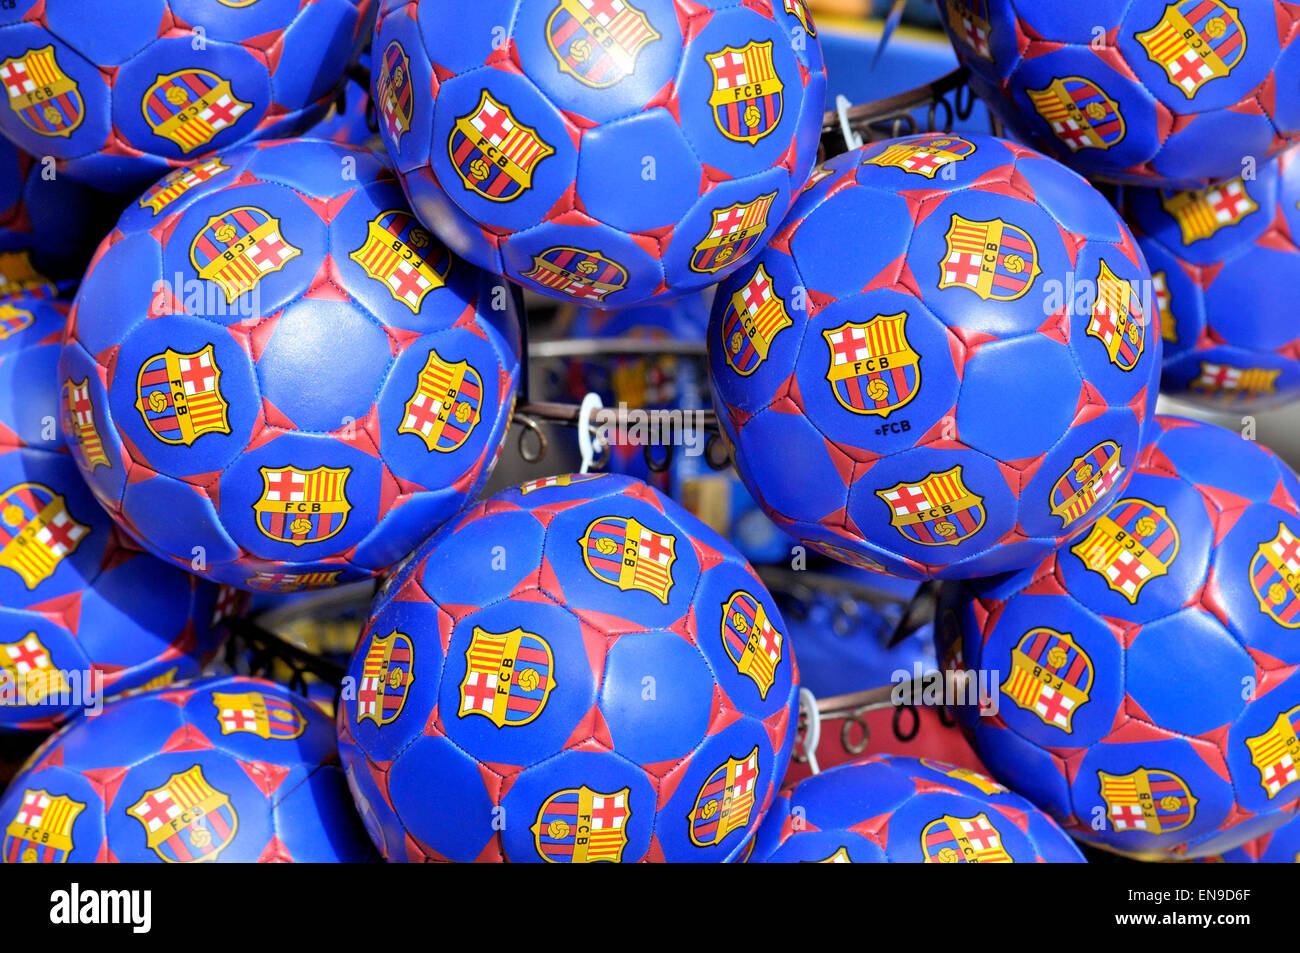 Des ballons de foot avec le logo du club de football de Barcelone Banque D'Images